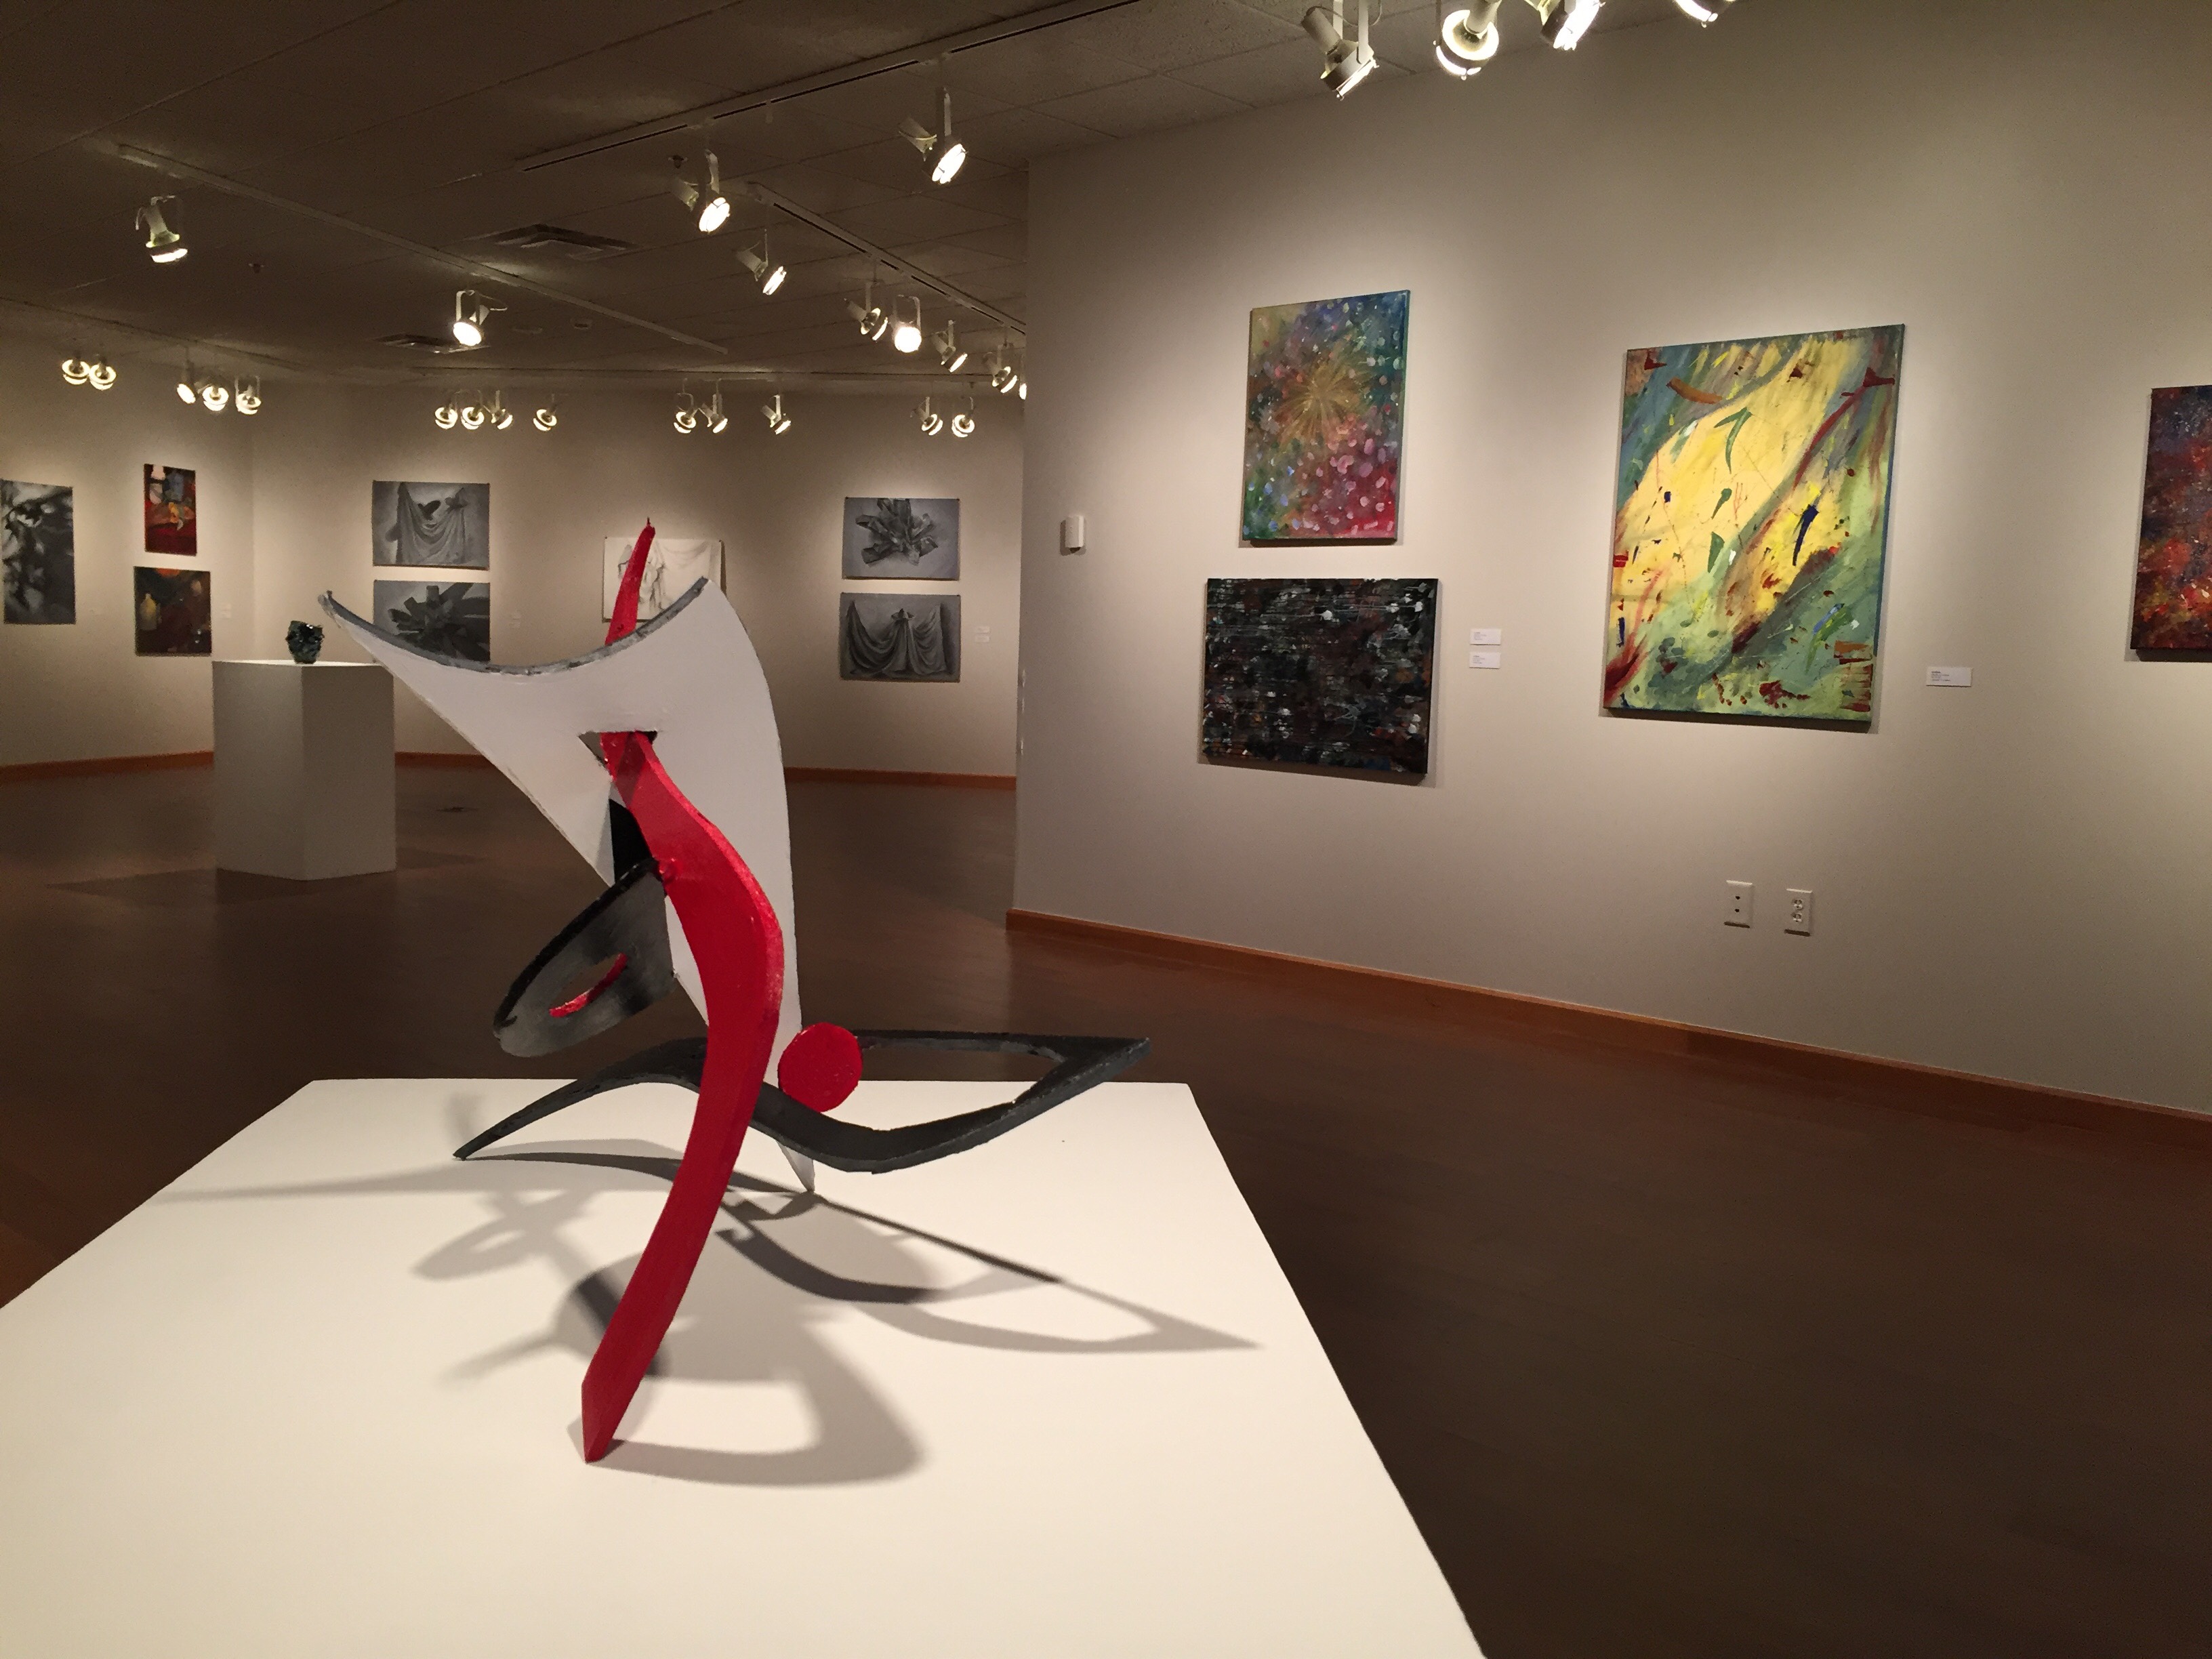 Exhibit showcases graduating students art